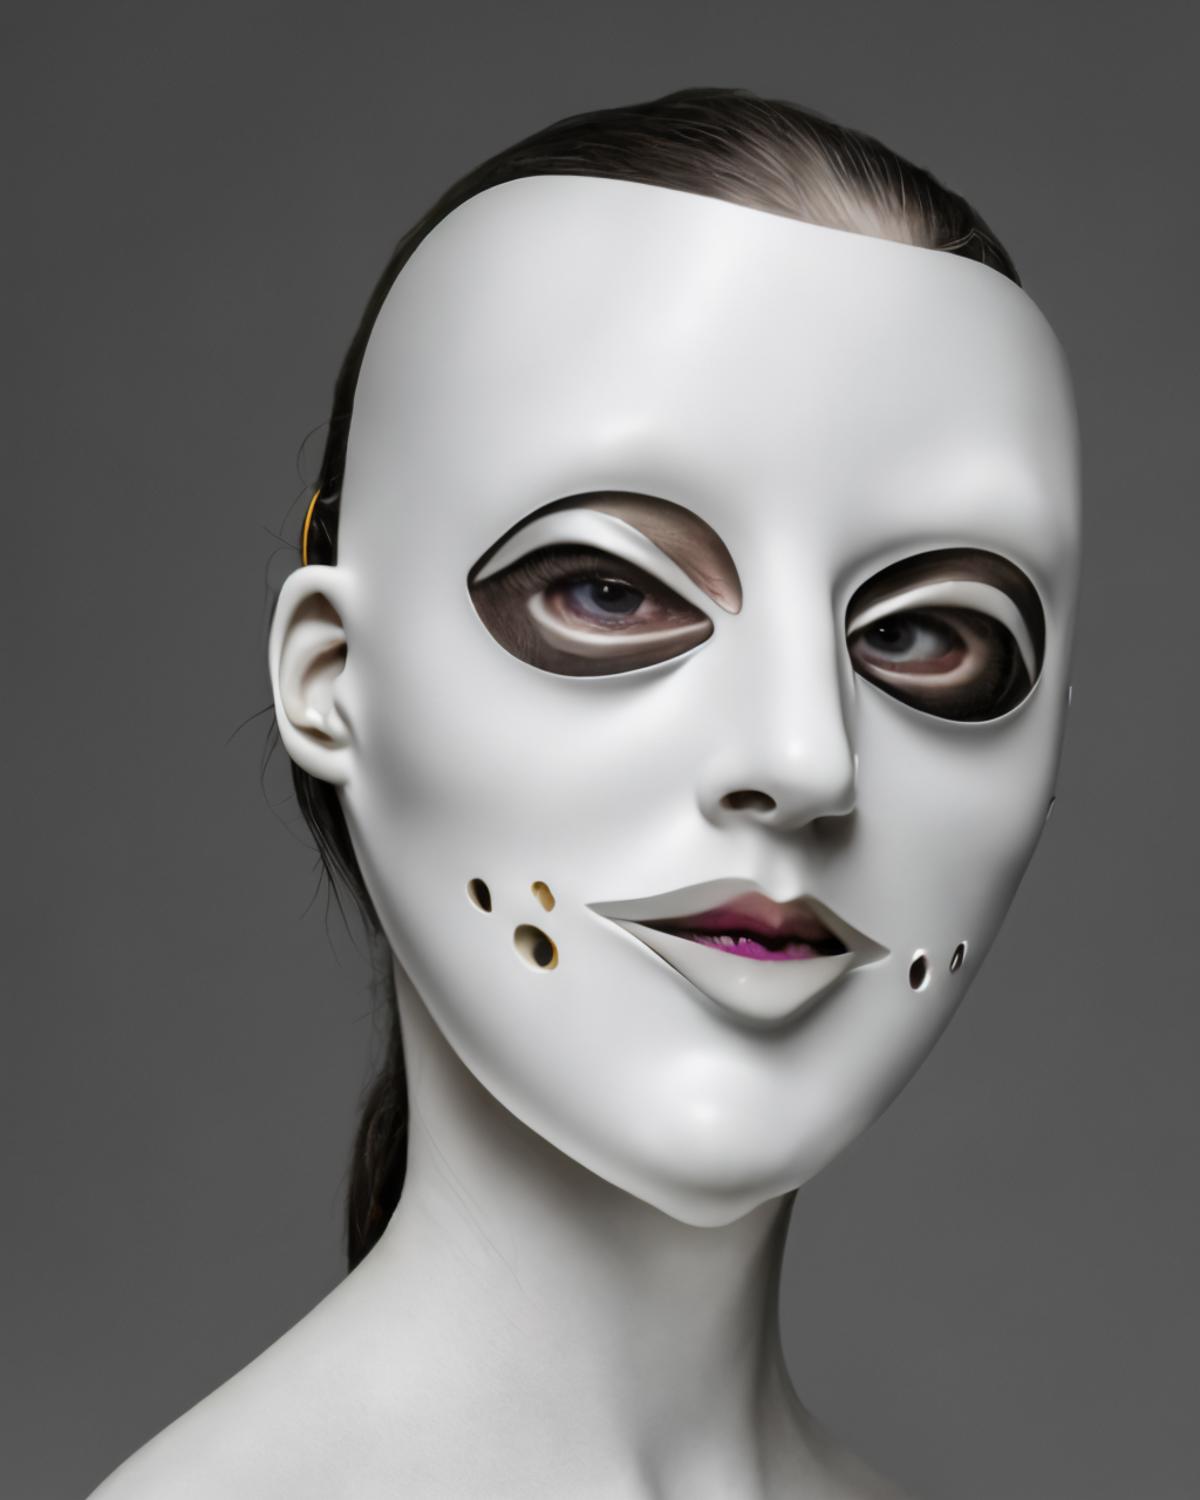 Creepy Mask image by Lara_De_Martin